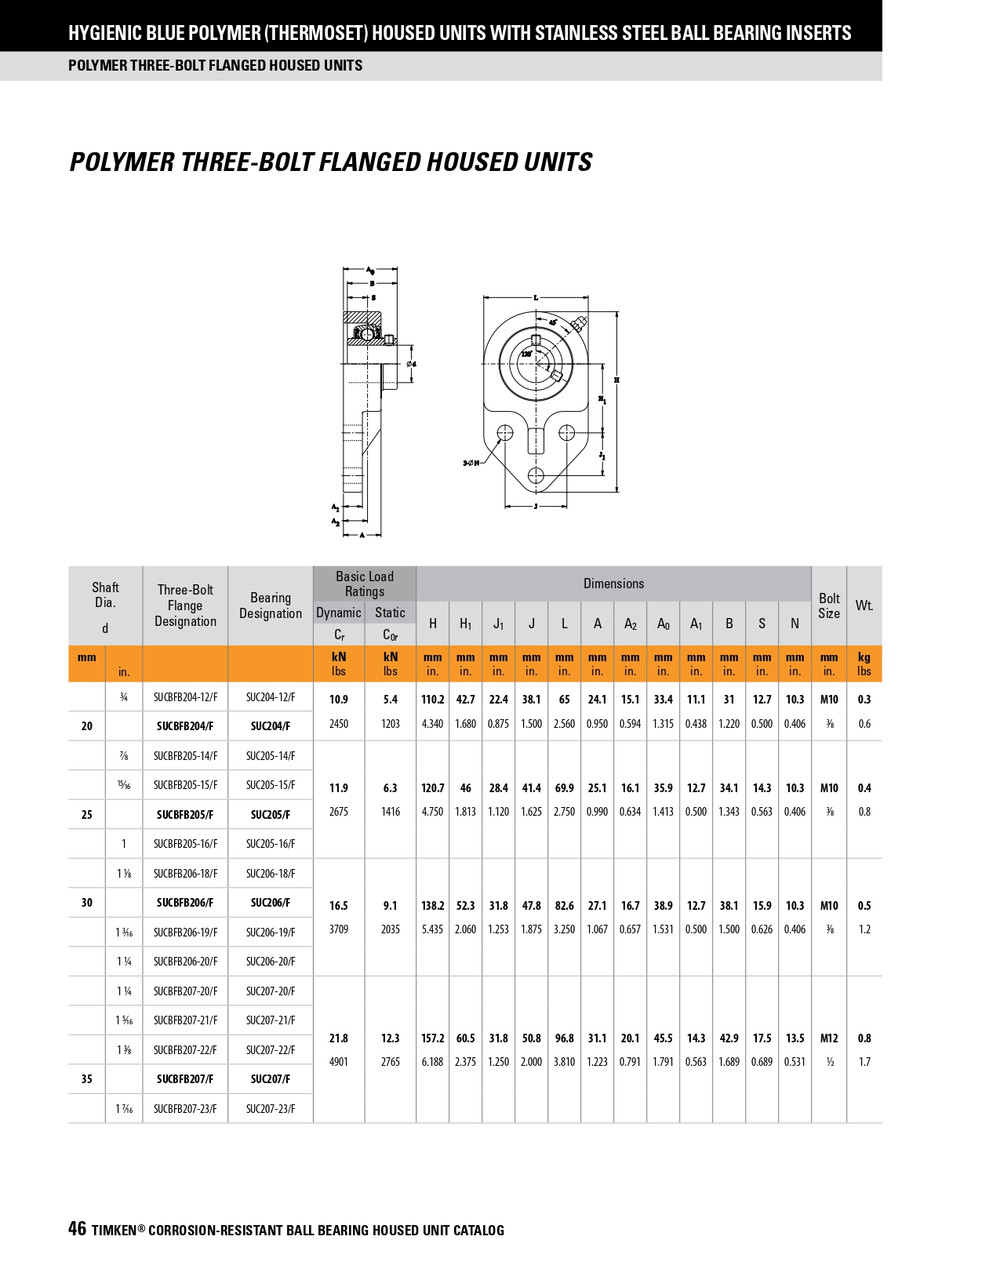 1-7/16" Hygienic Polymer Set Screw Three-Bolt Flange Block Assembly   SUCBFB207-23/F